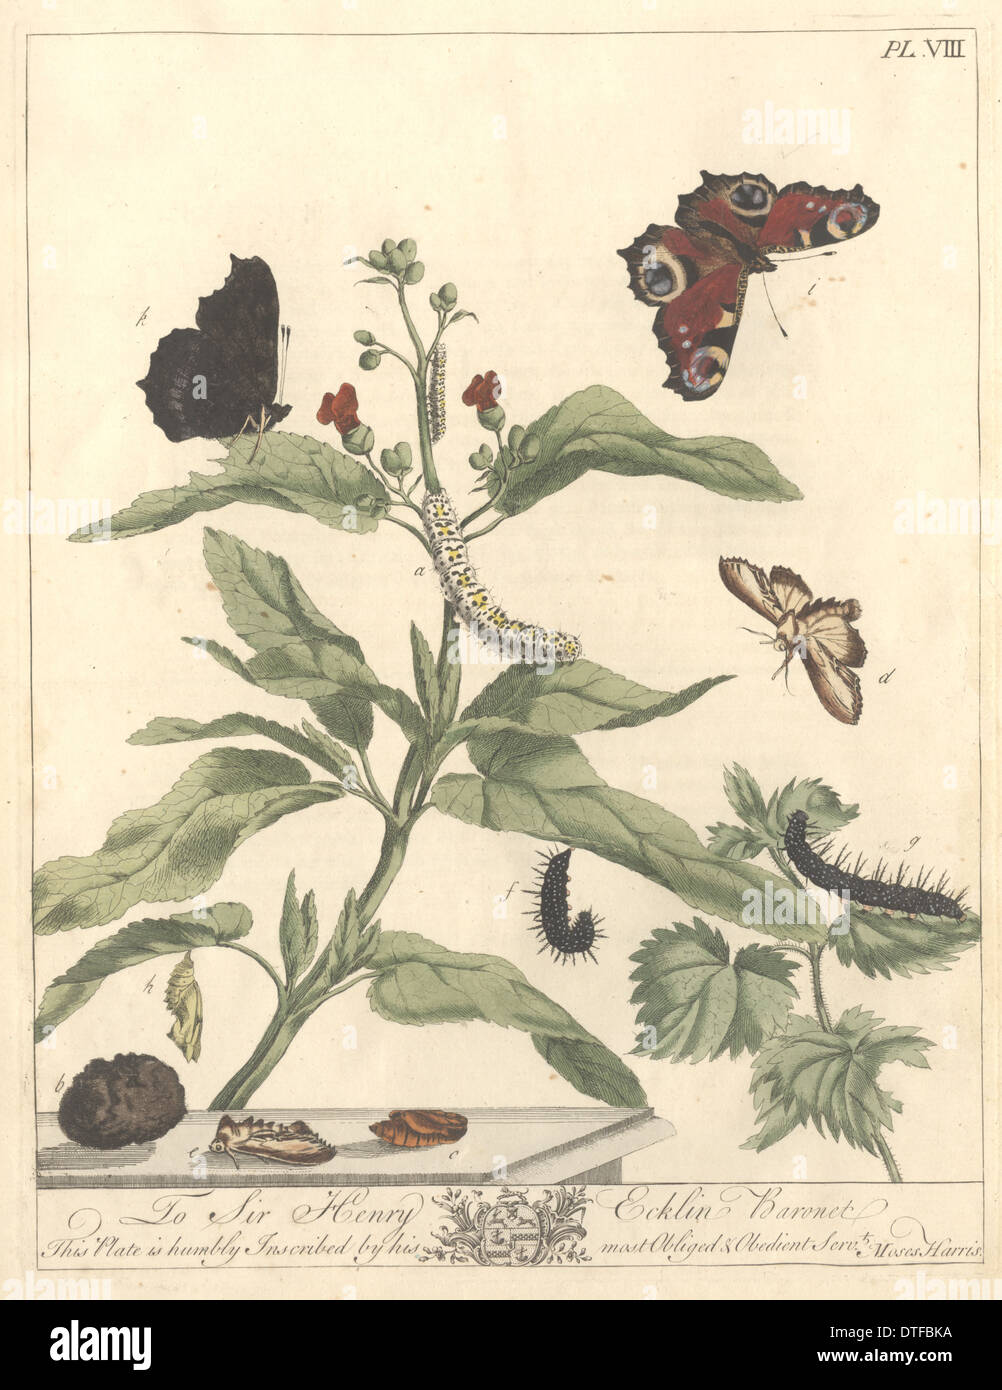 Plate VIII, The Water Betony Moth Stock Photo